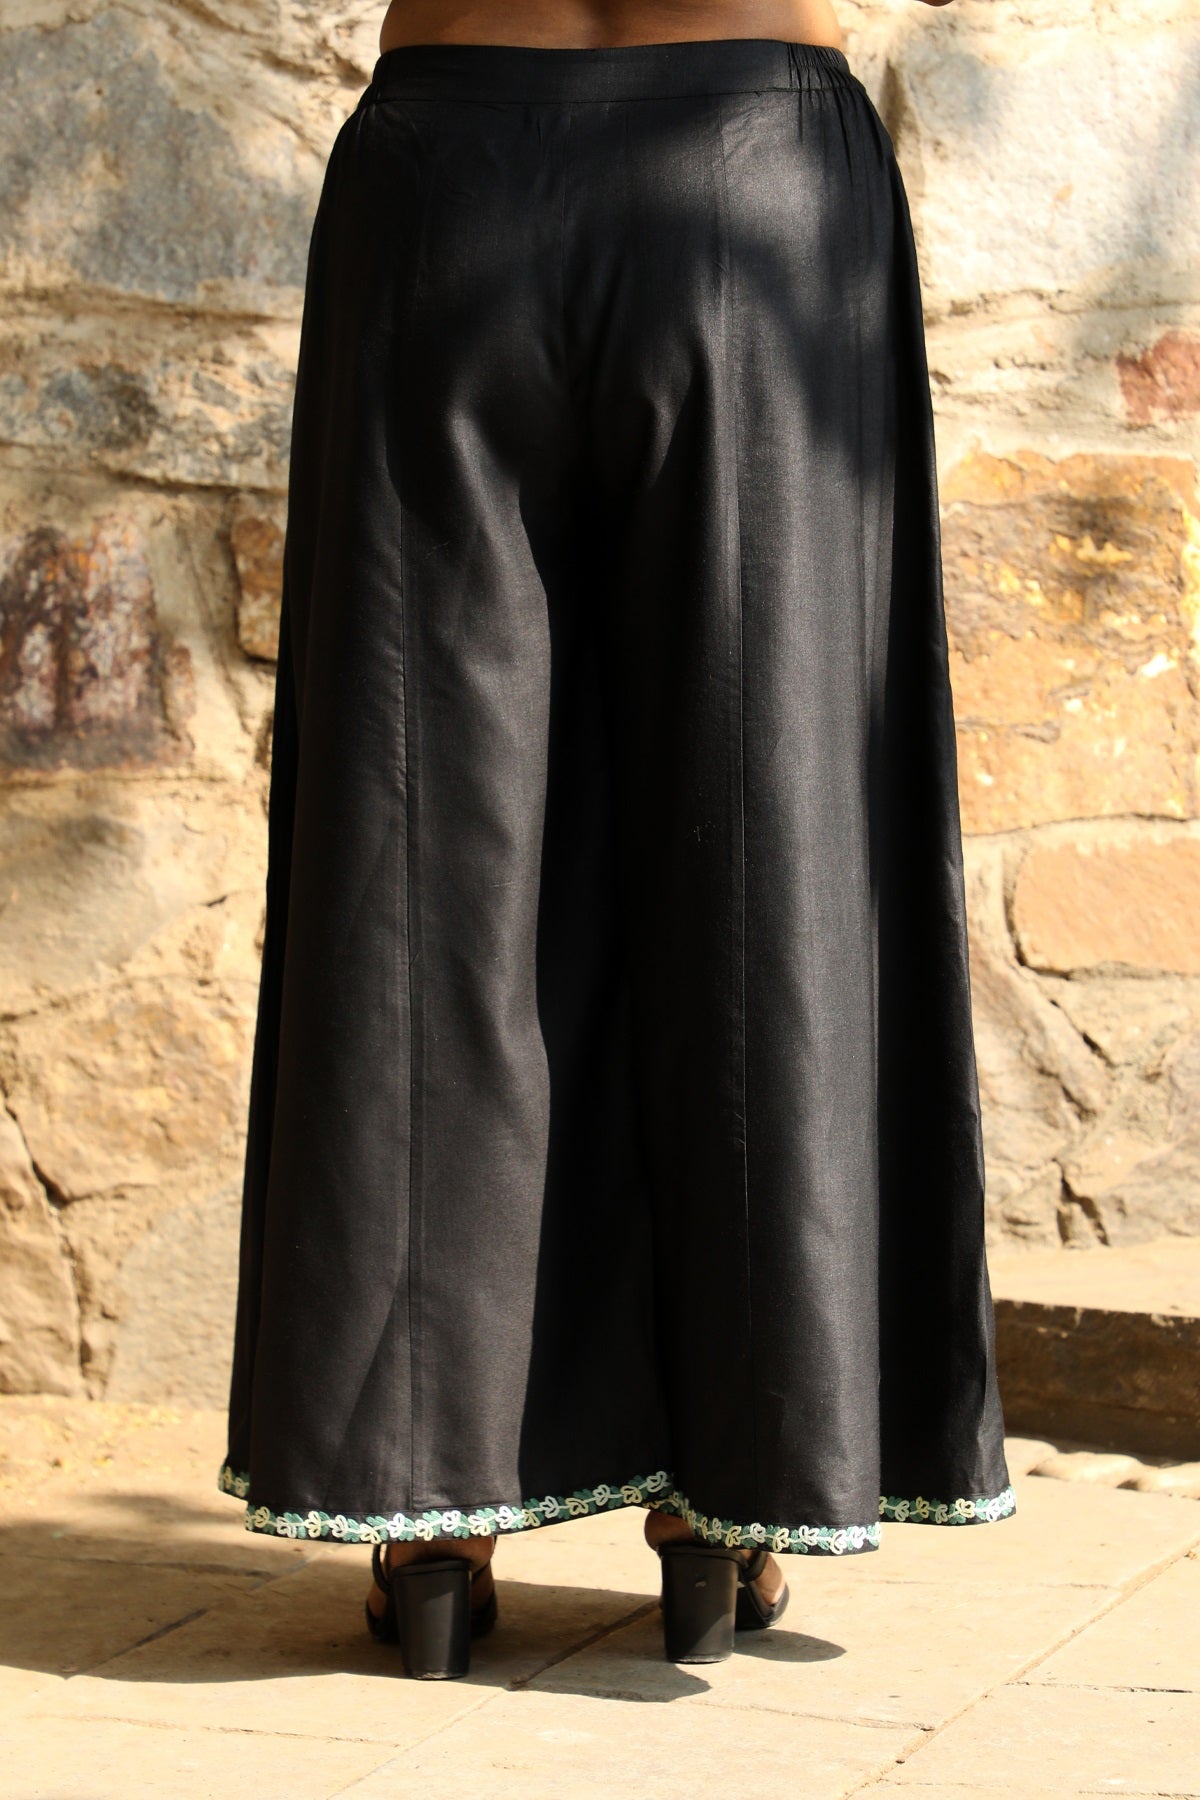 Zahrun Black Pants with Embroidered Hemline